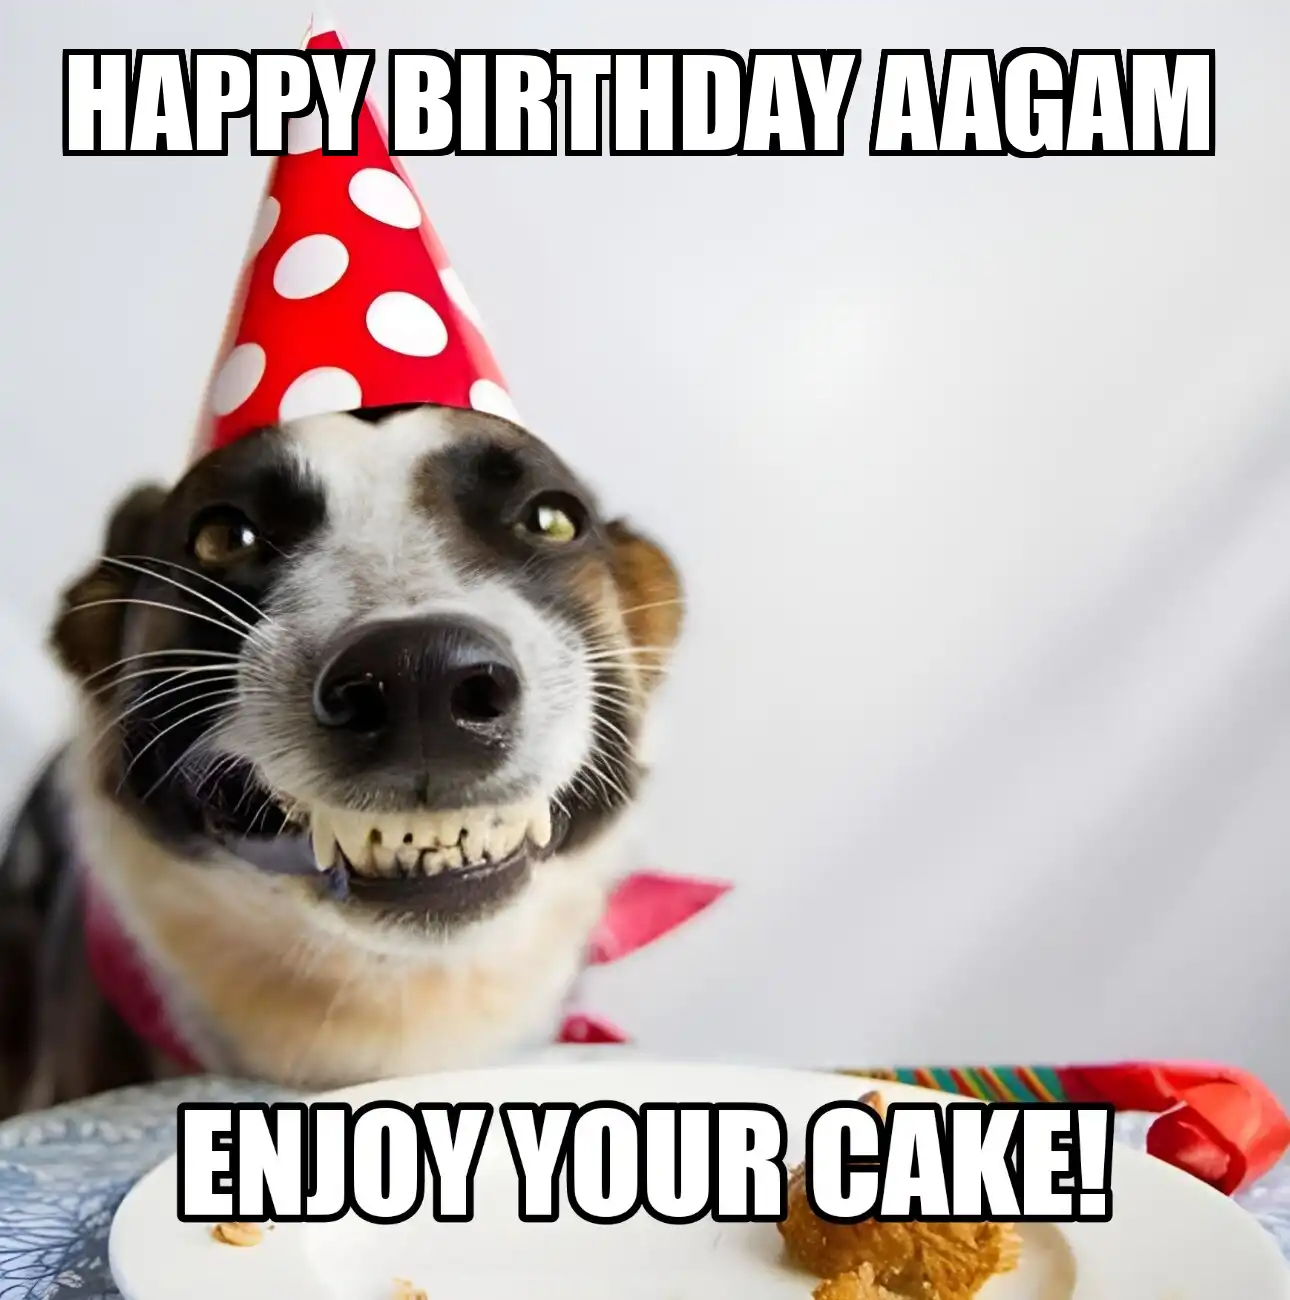 Happy Birthday Aagam Enjoy Your Cake Dog Meme